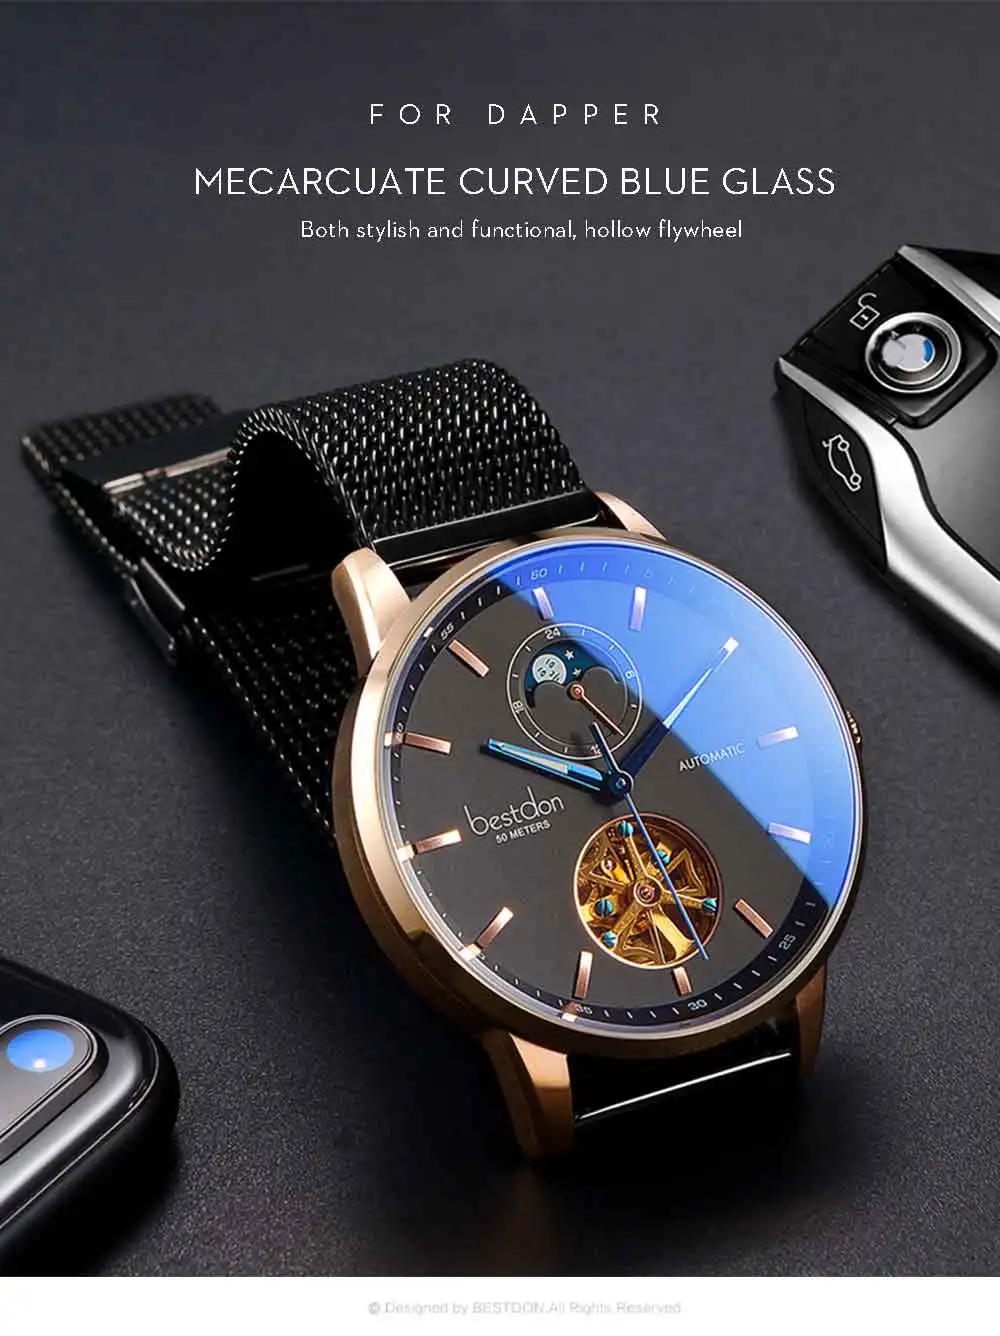 Bestdon Luxury Mechanical Watch Men Automatic Tourbillon Sports Watches Mens Fashion Switzerland Brand Watch Relogio Masculino